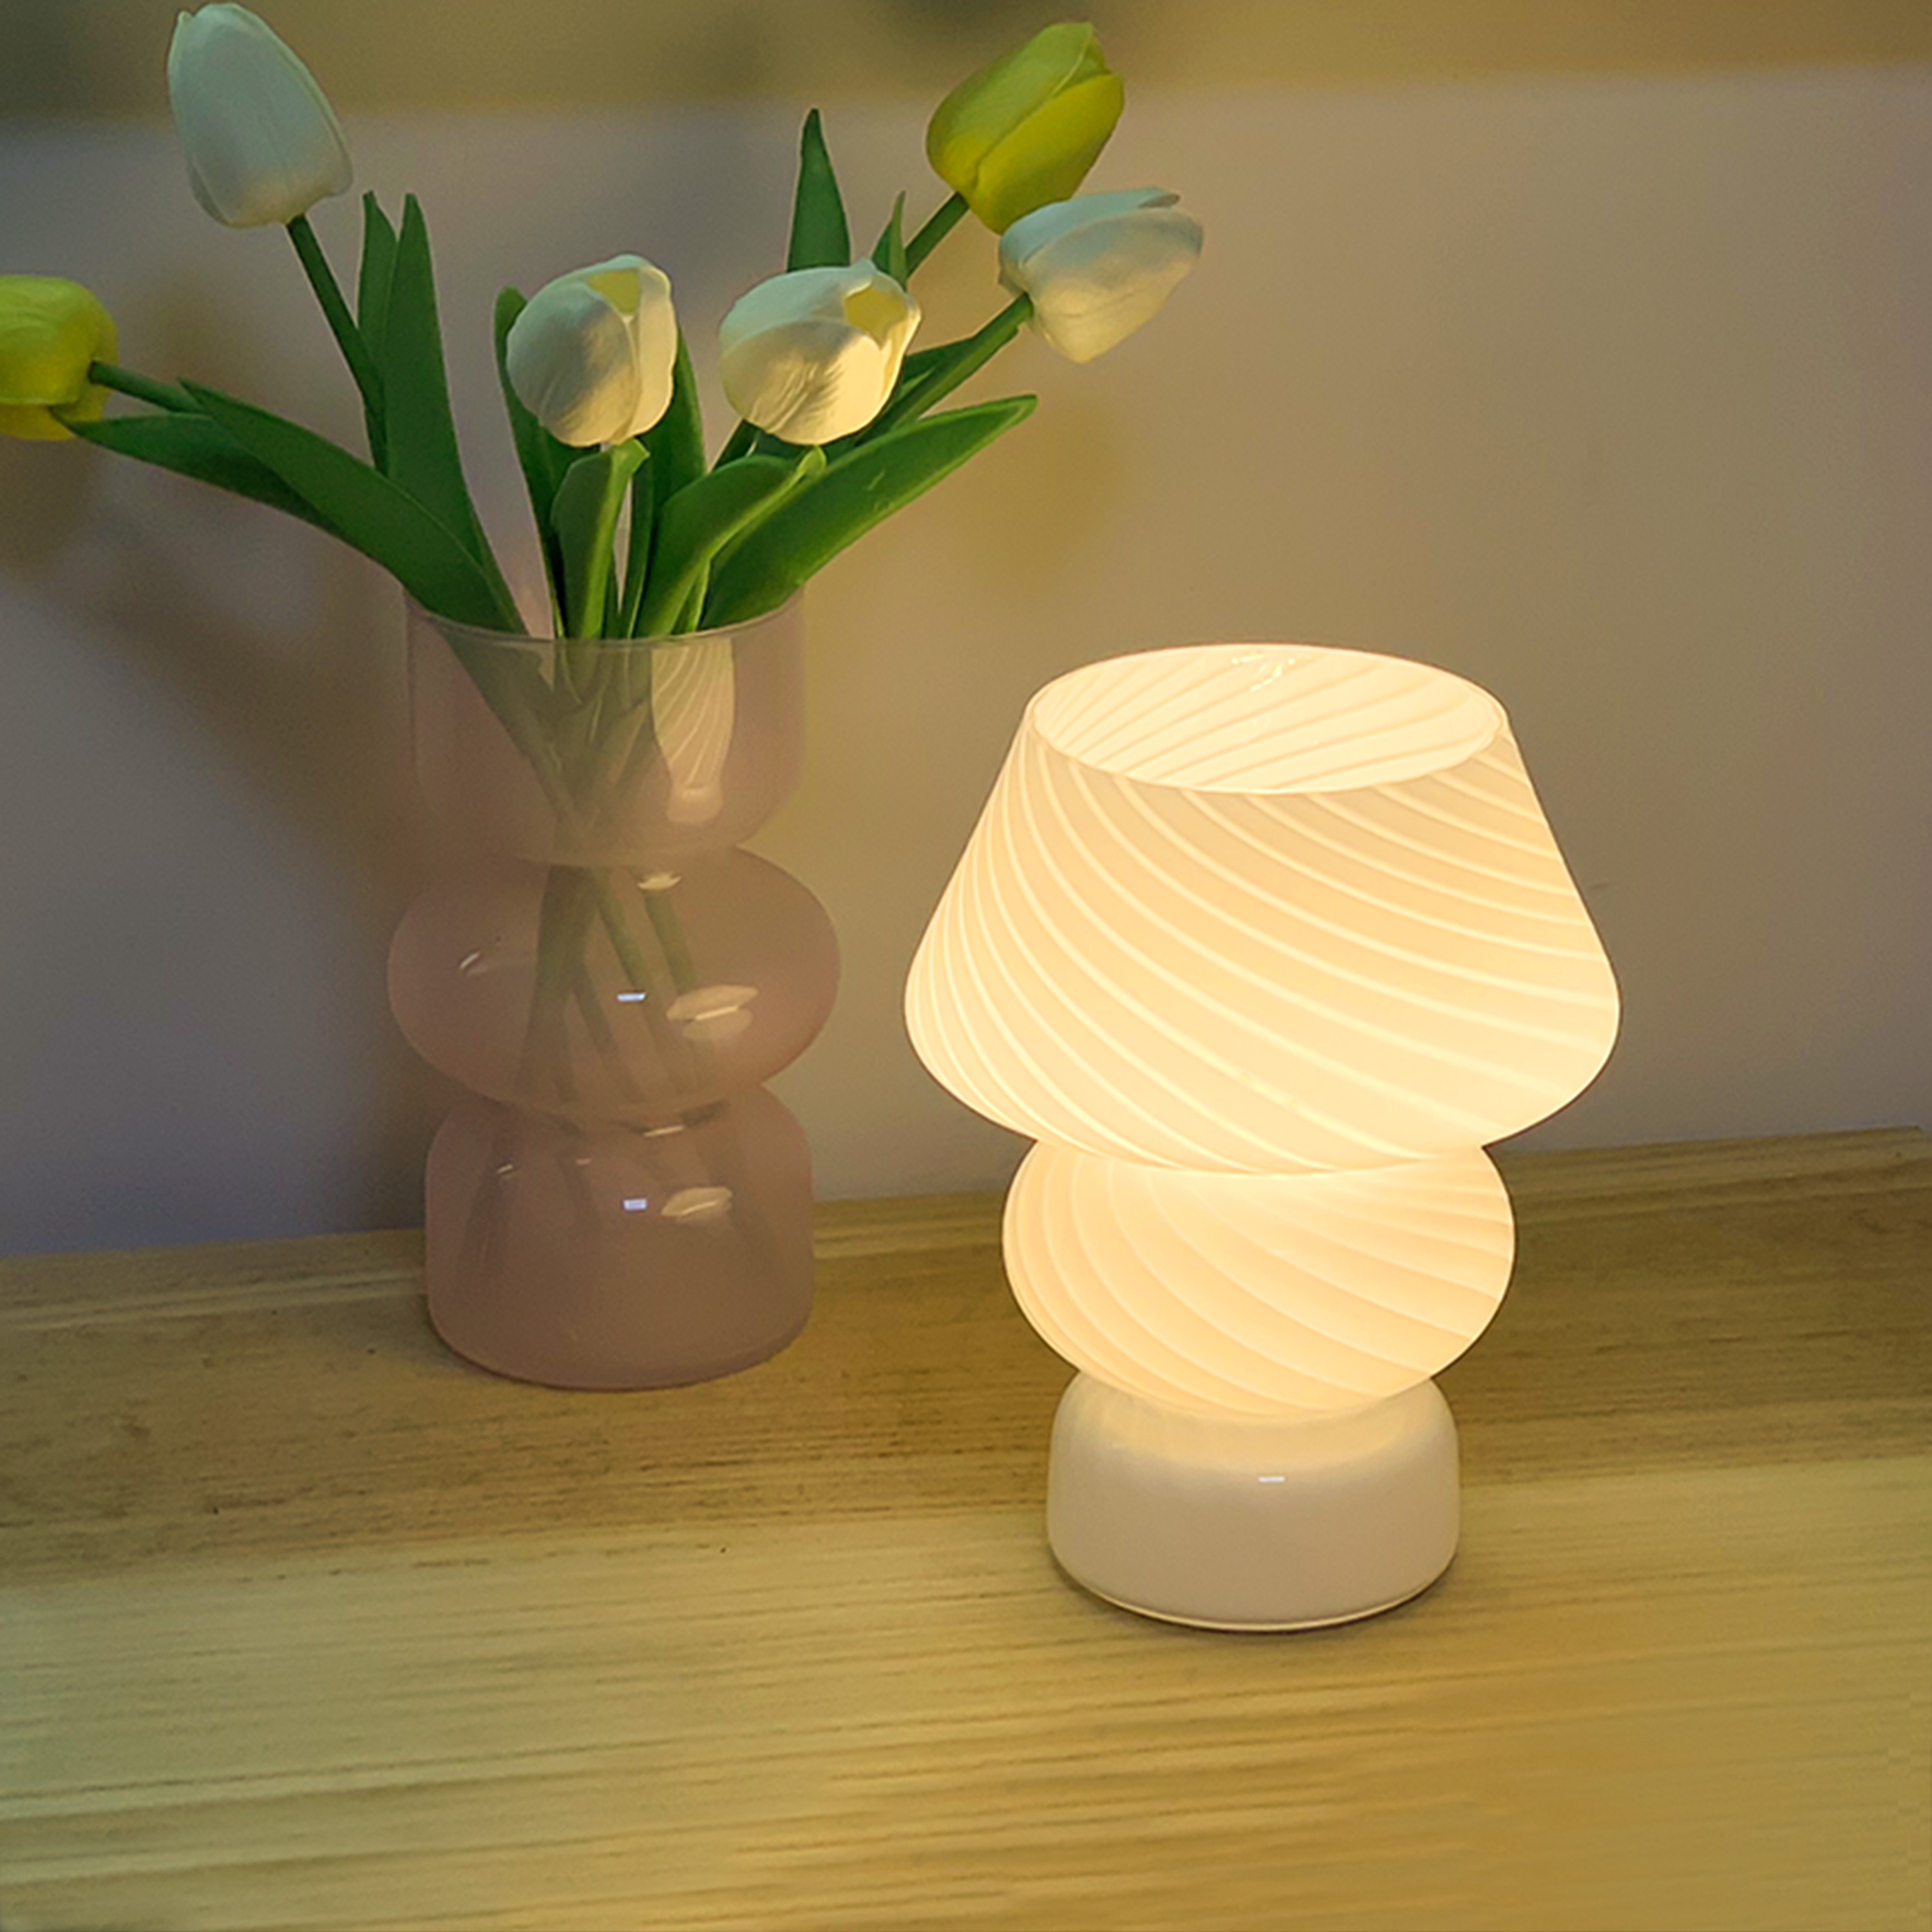 Monochrome Warm Light Mushroom Table Lamp With Base